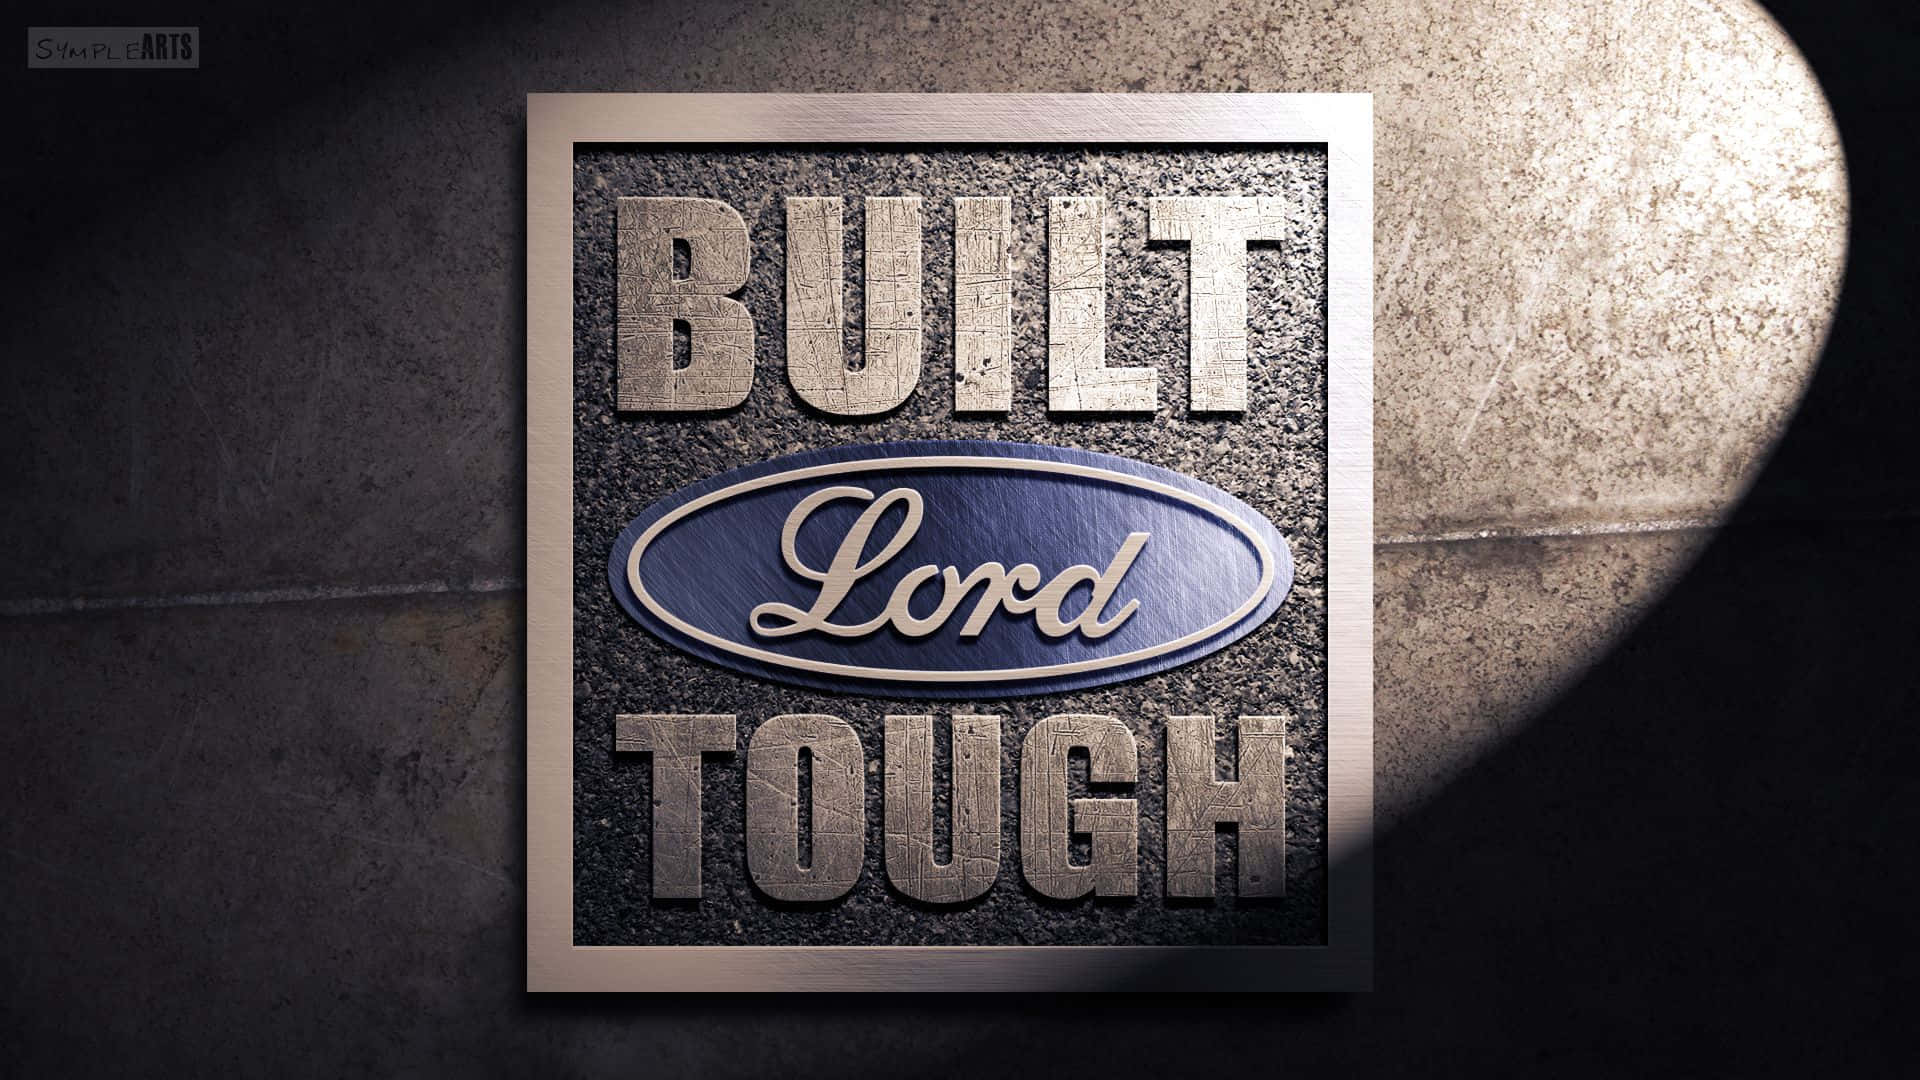 Built Lord Tough Logo On A Wall Wallpaper